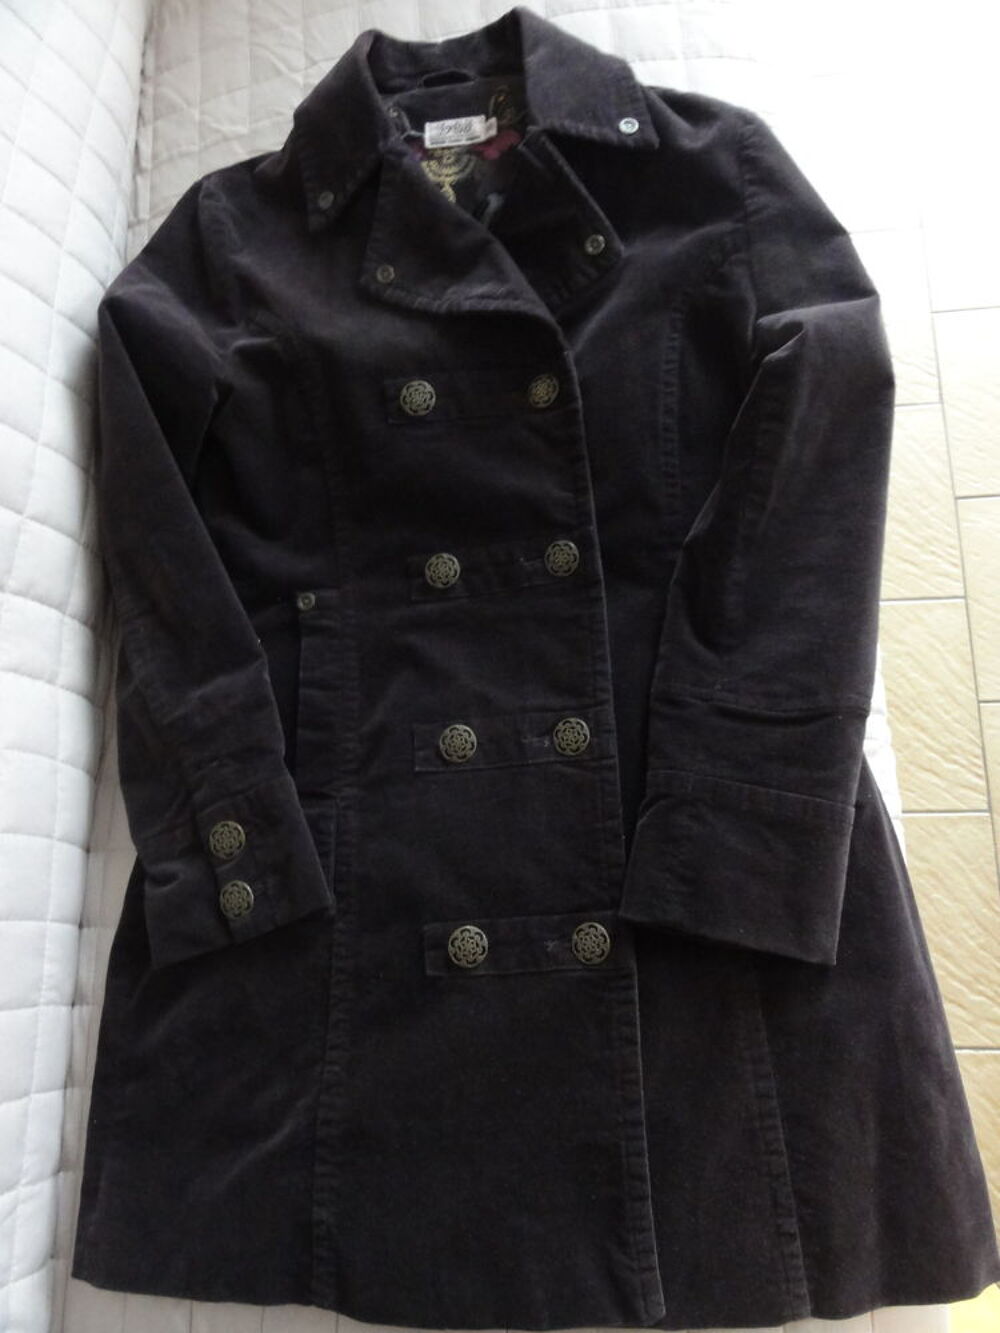 Manteau Trench-coat Velours marron
Taille : 38
Vtements